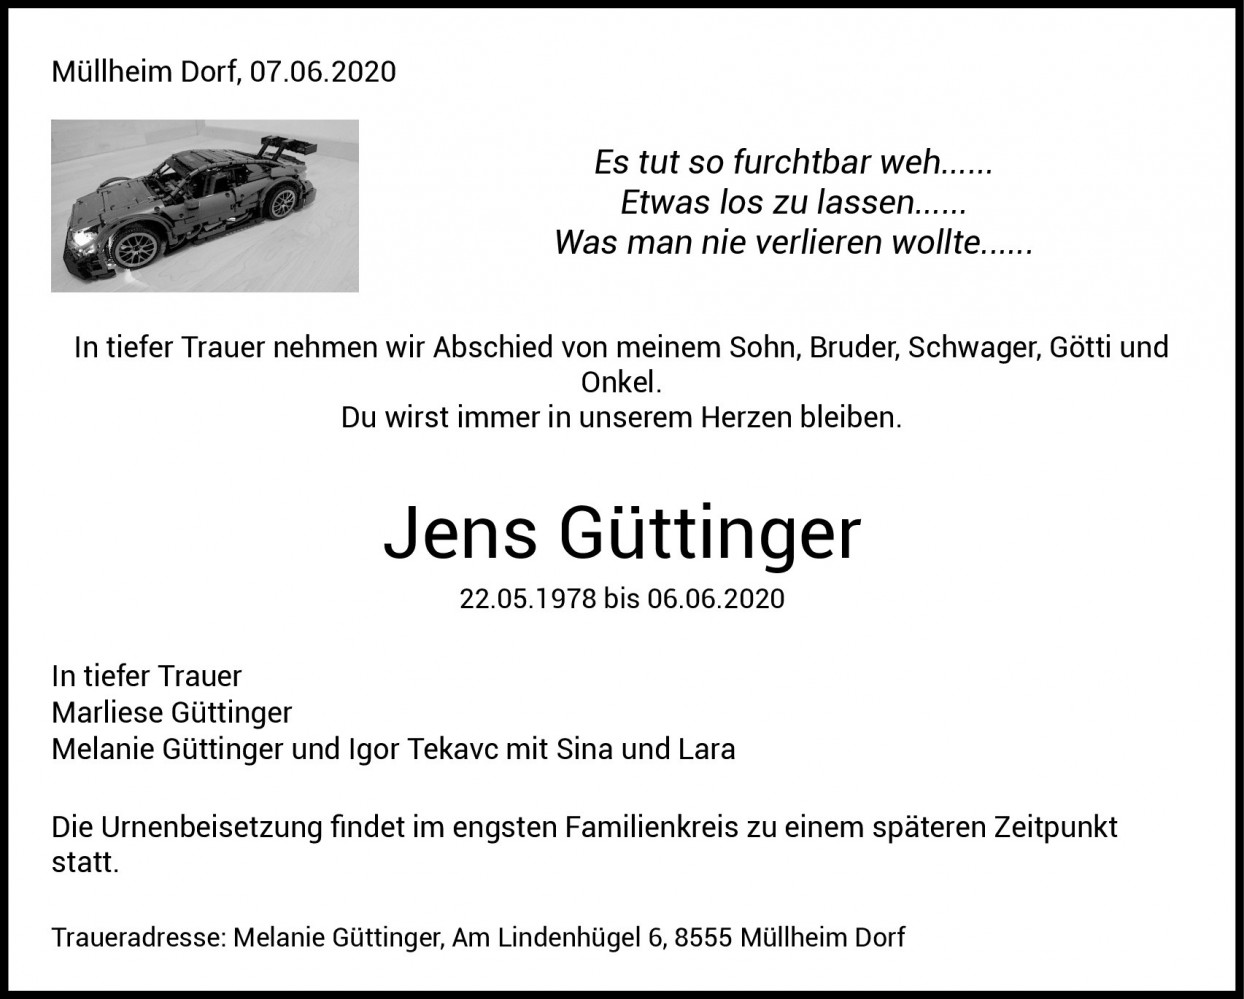 Jens Güttinger